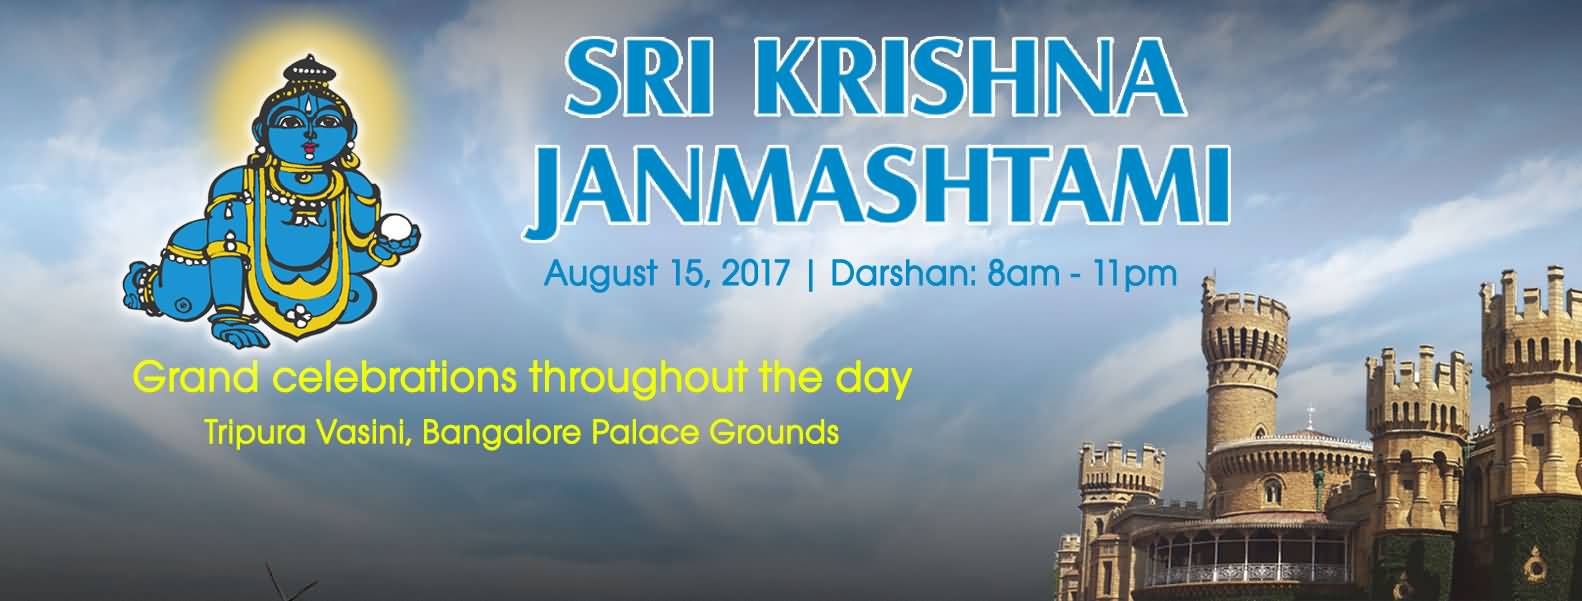 Sri Krishna Janmashtami Grand Celebrations Throughout The Day